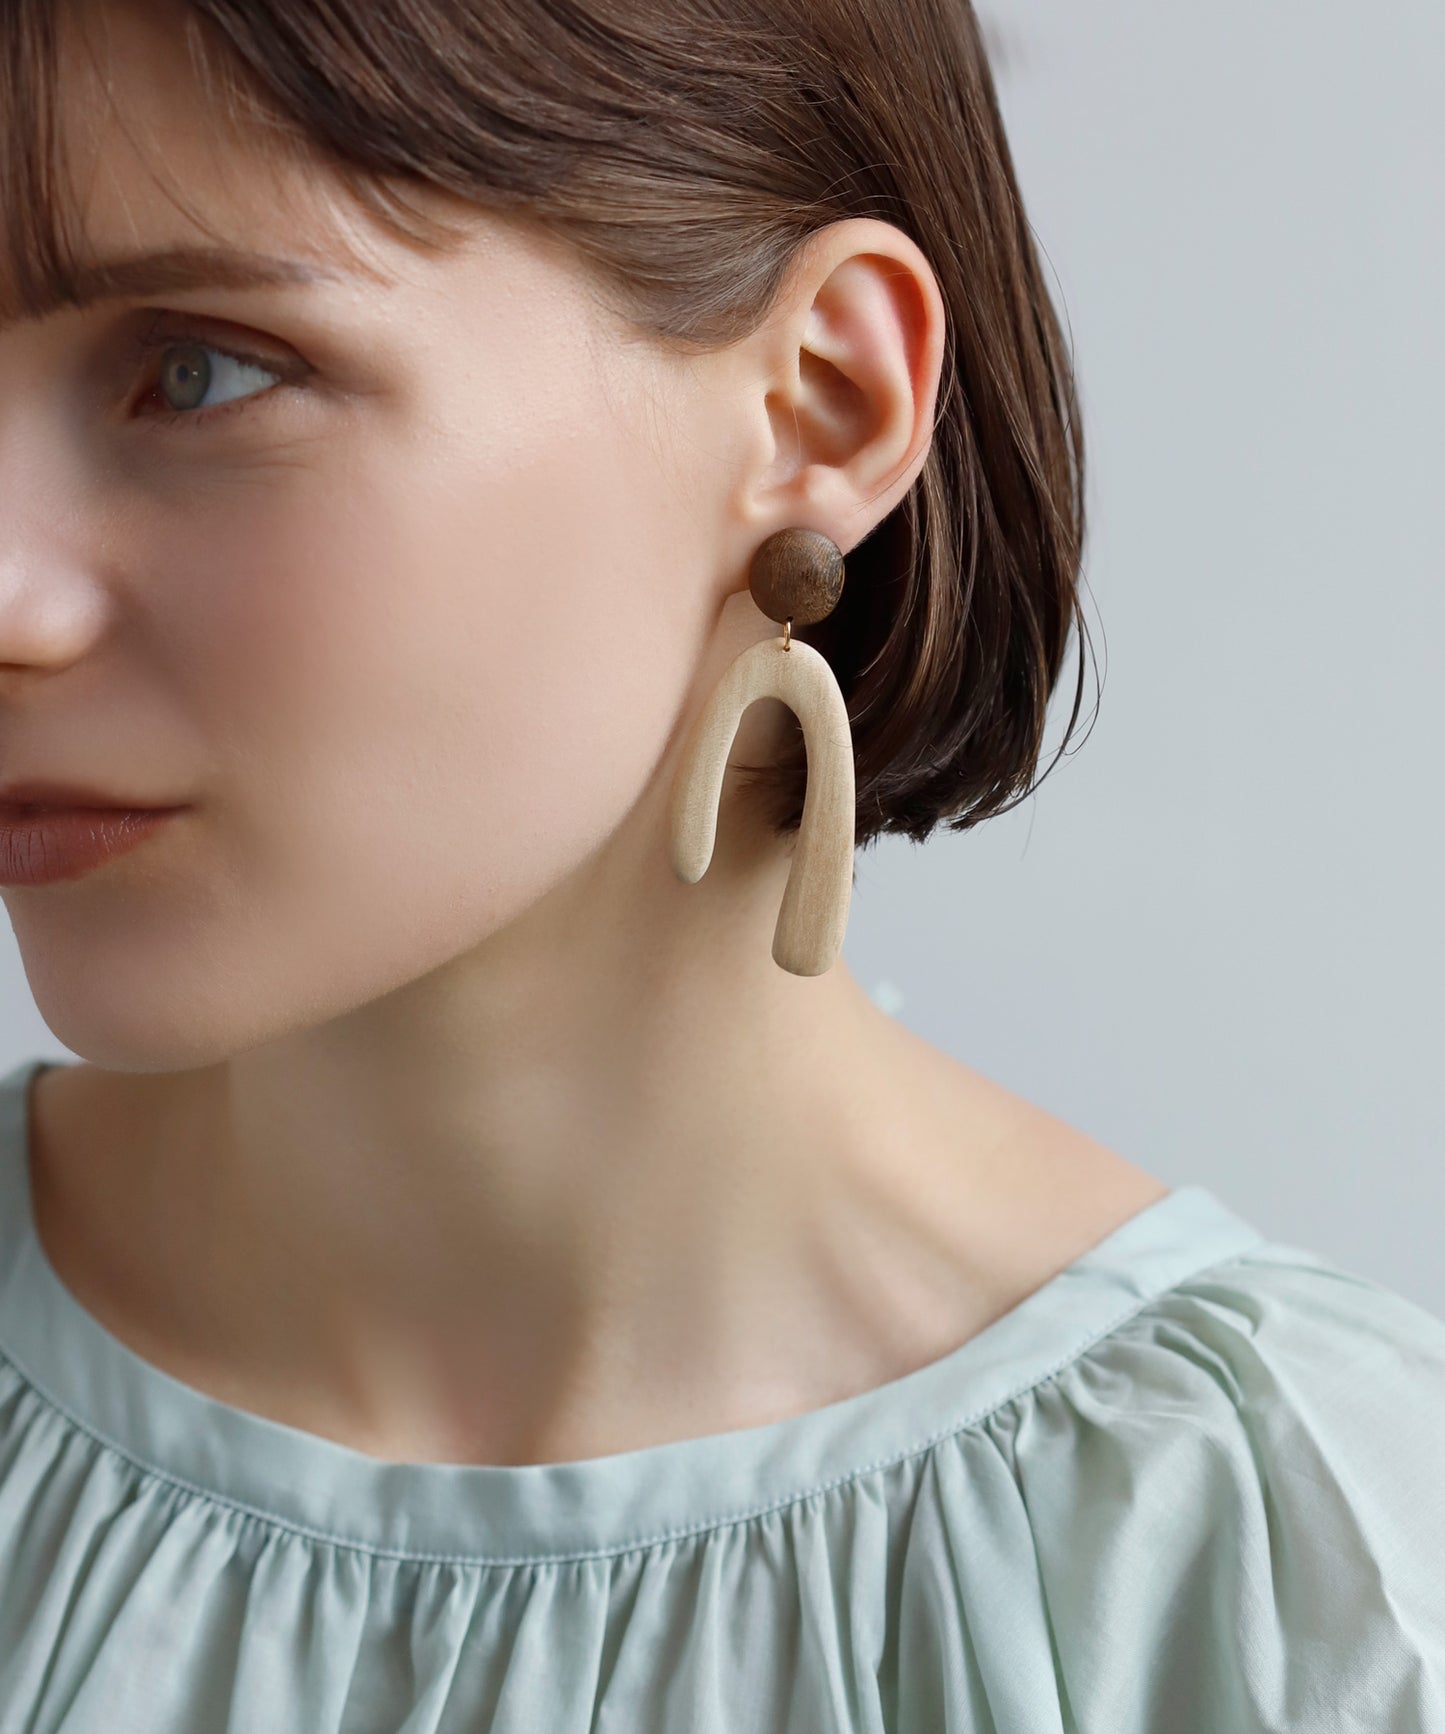 Wood Earrings[Ownideal]